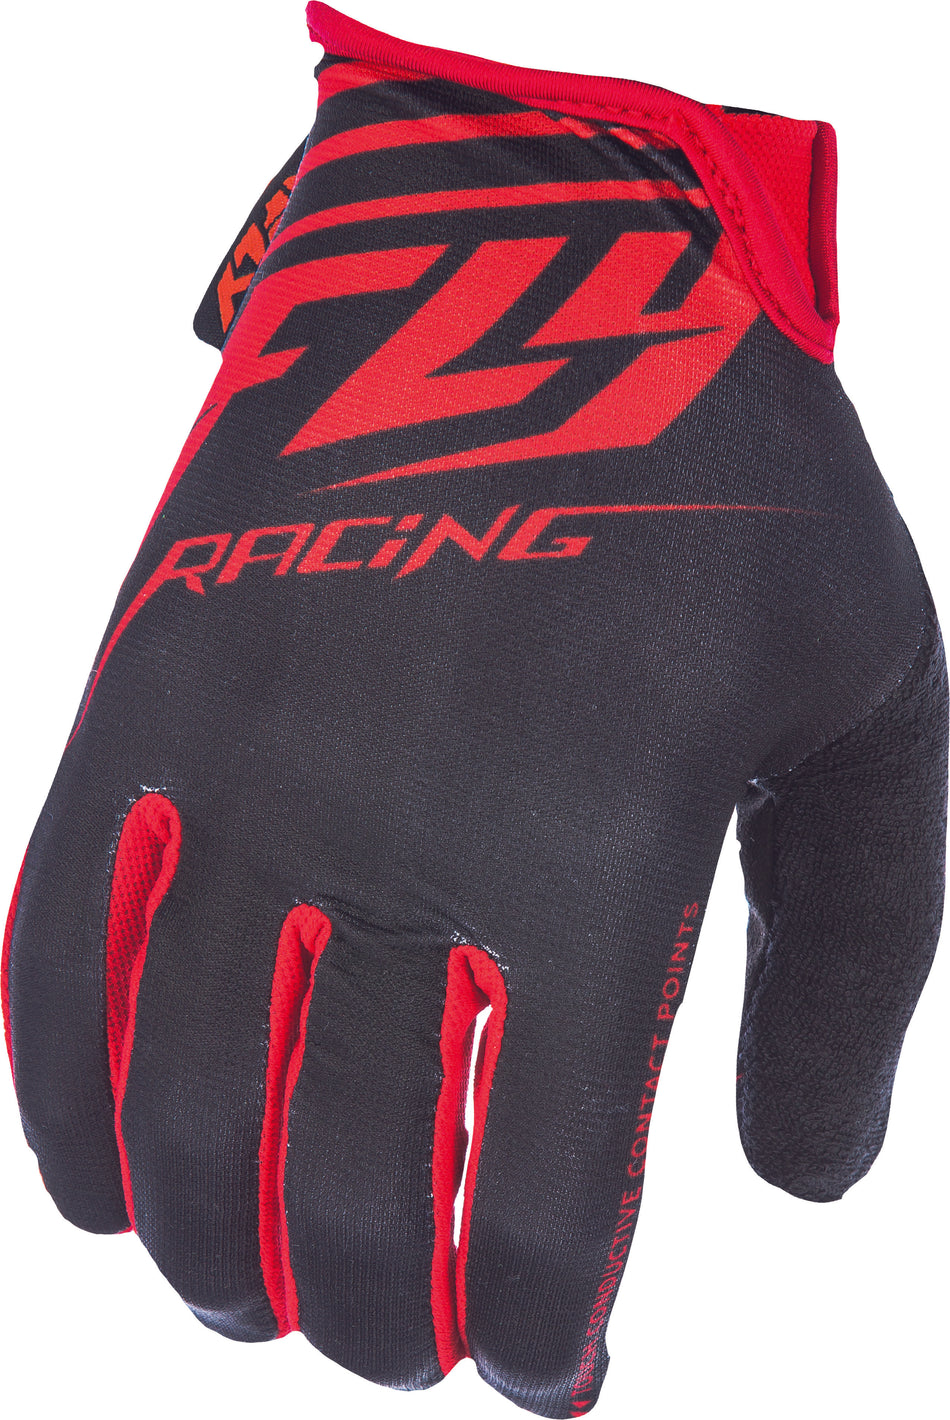 FLY RACING Media Gloves Black/Red Sz 9 350-07209